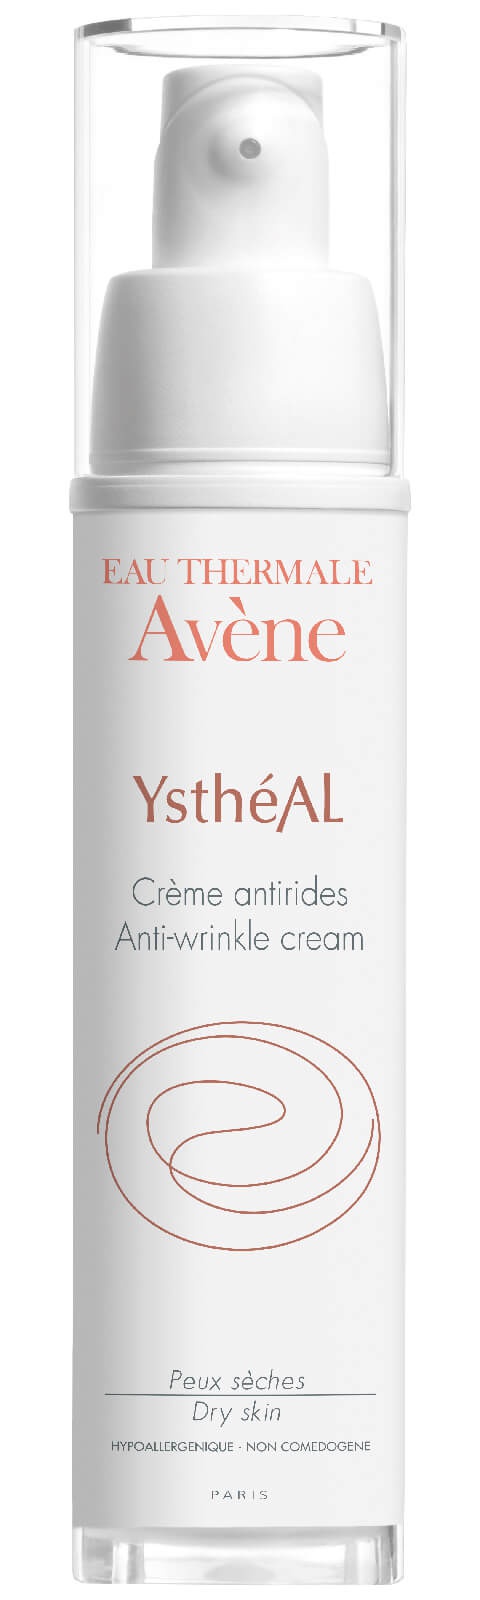 Avene Ystheal Anti-Wrinkle Cream